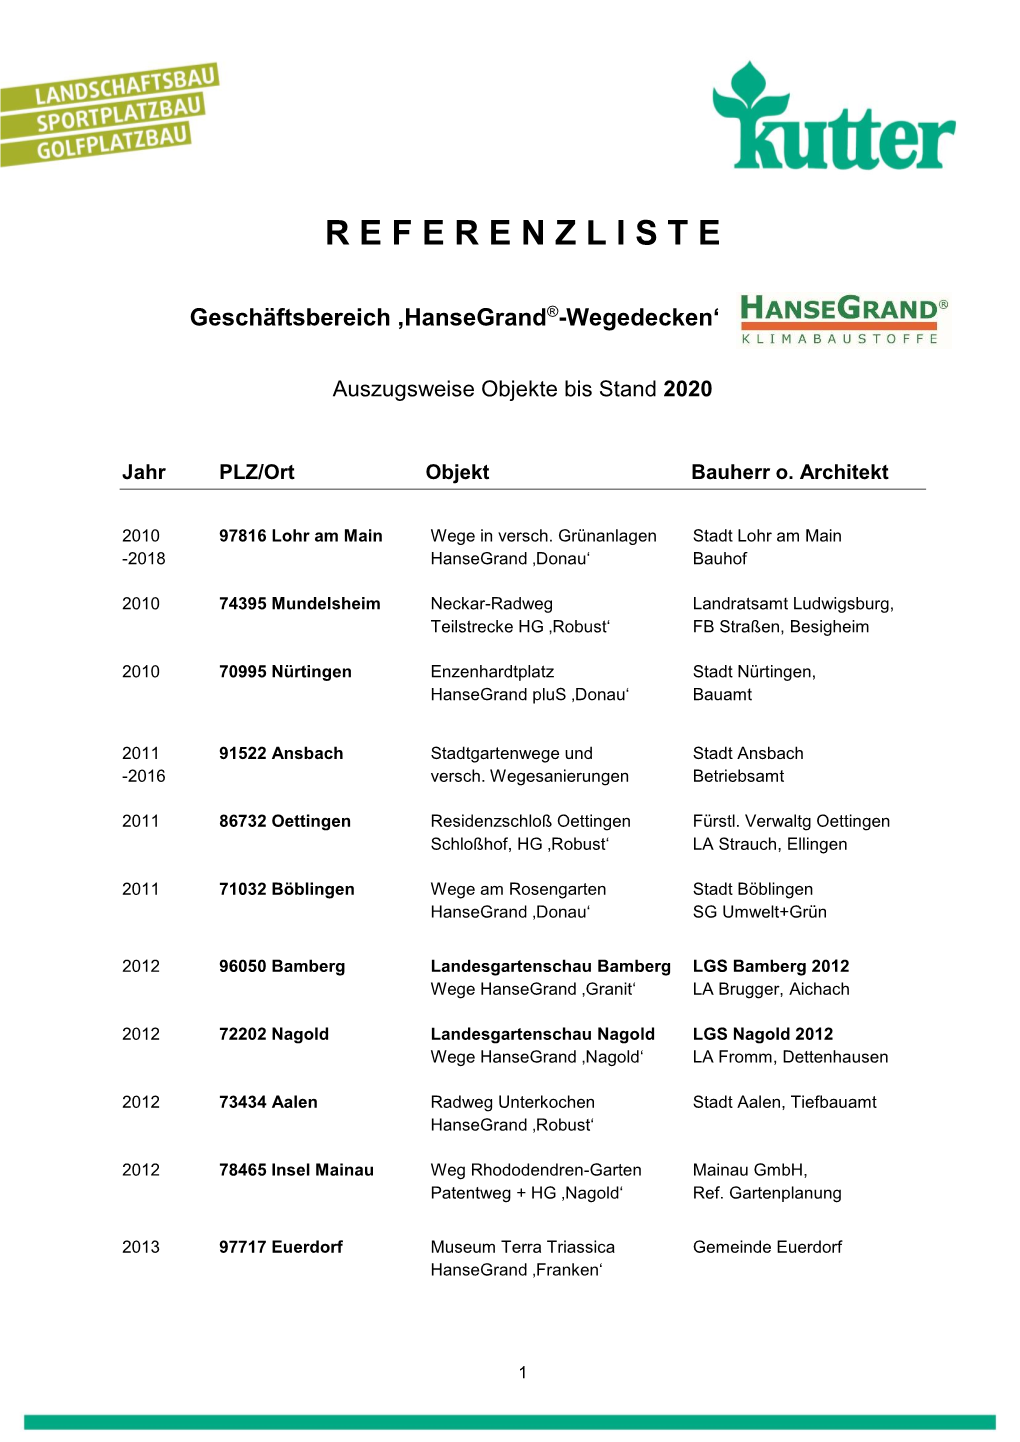 Referenzliste Hansegrand